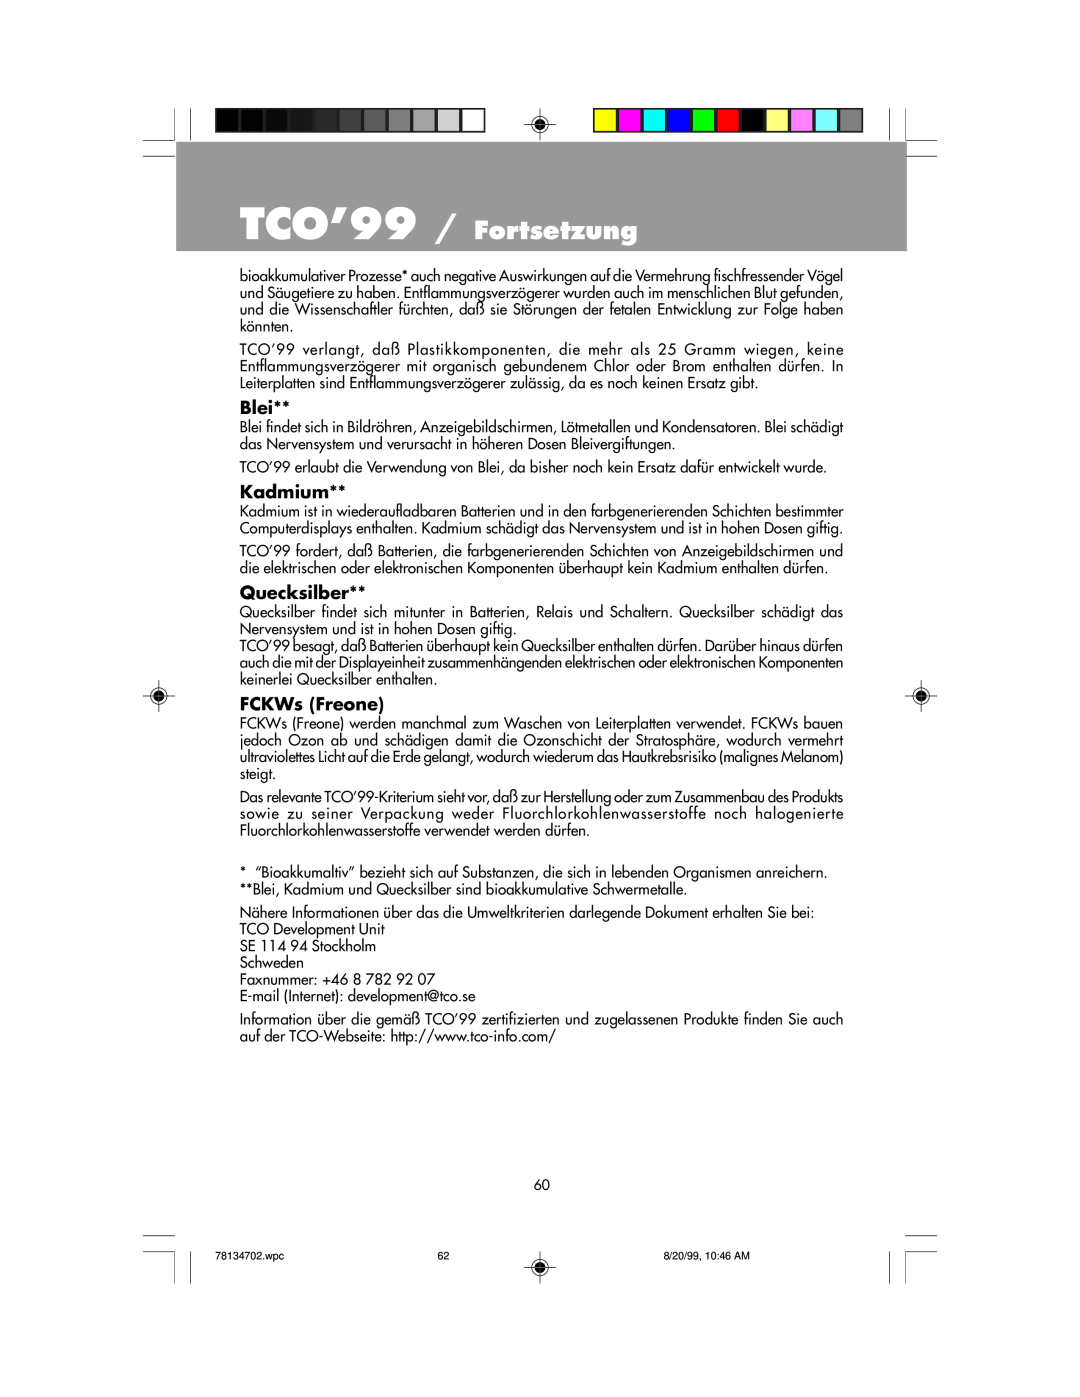 NEC LCD1510+ user manual TCO’99 / Fortsetzung, Blei, Kadmium, Quecksilber, FCKWs Freone 